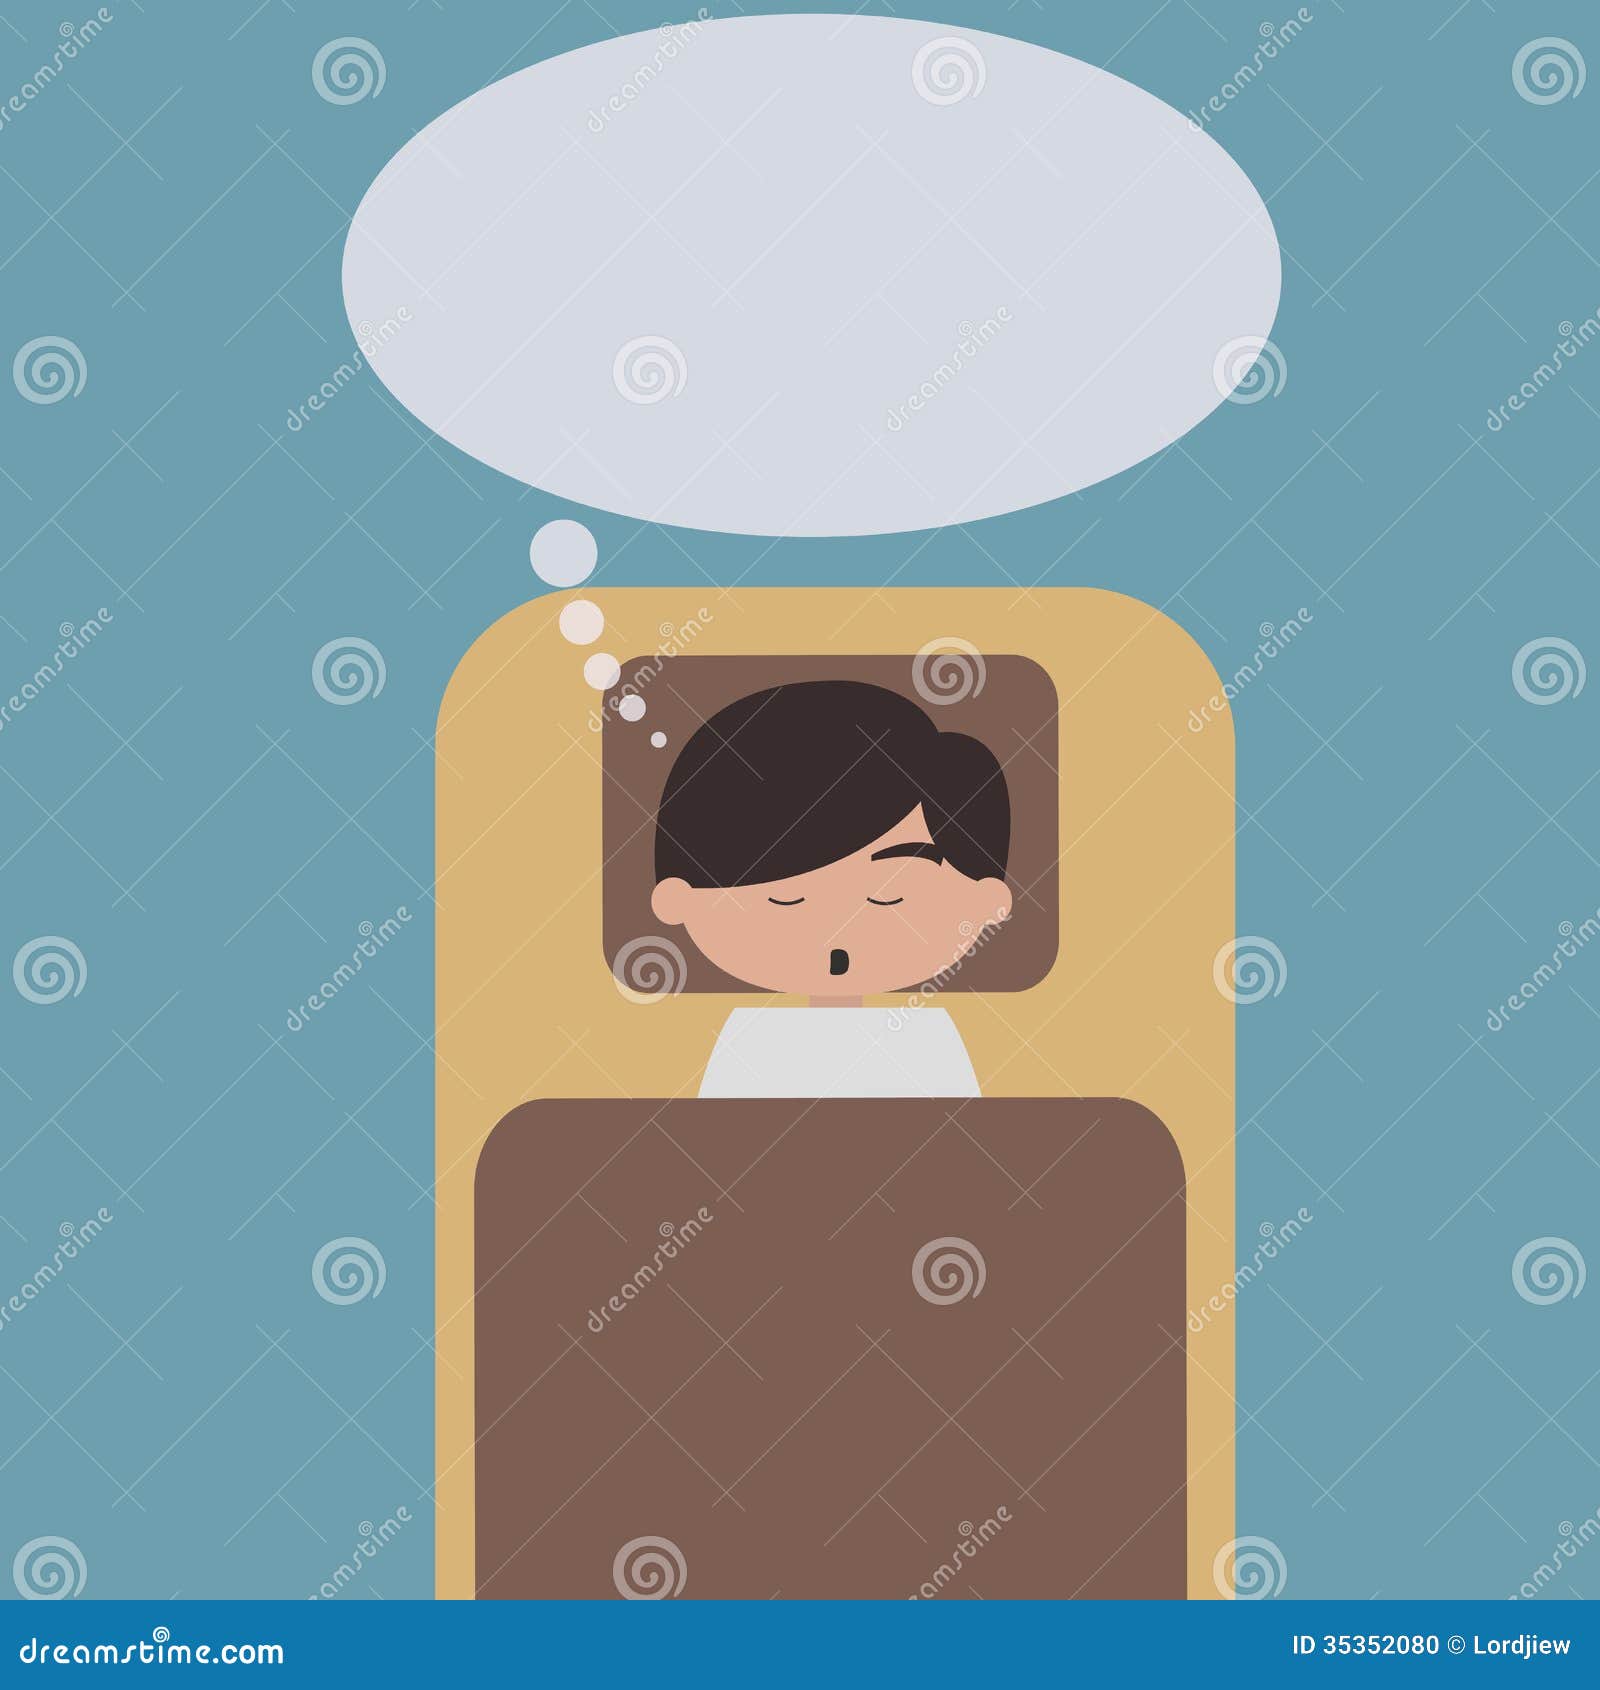 Sleeping Man with Speech Bubble Stock Vector - Illustration of pajamas ...